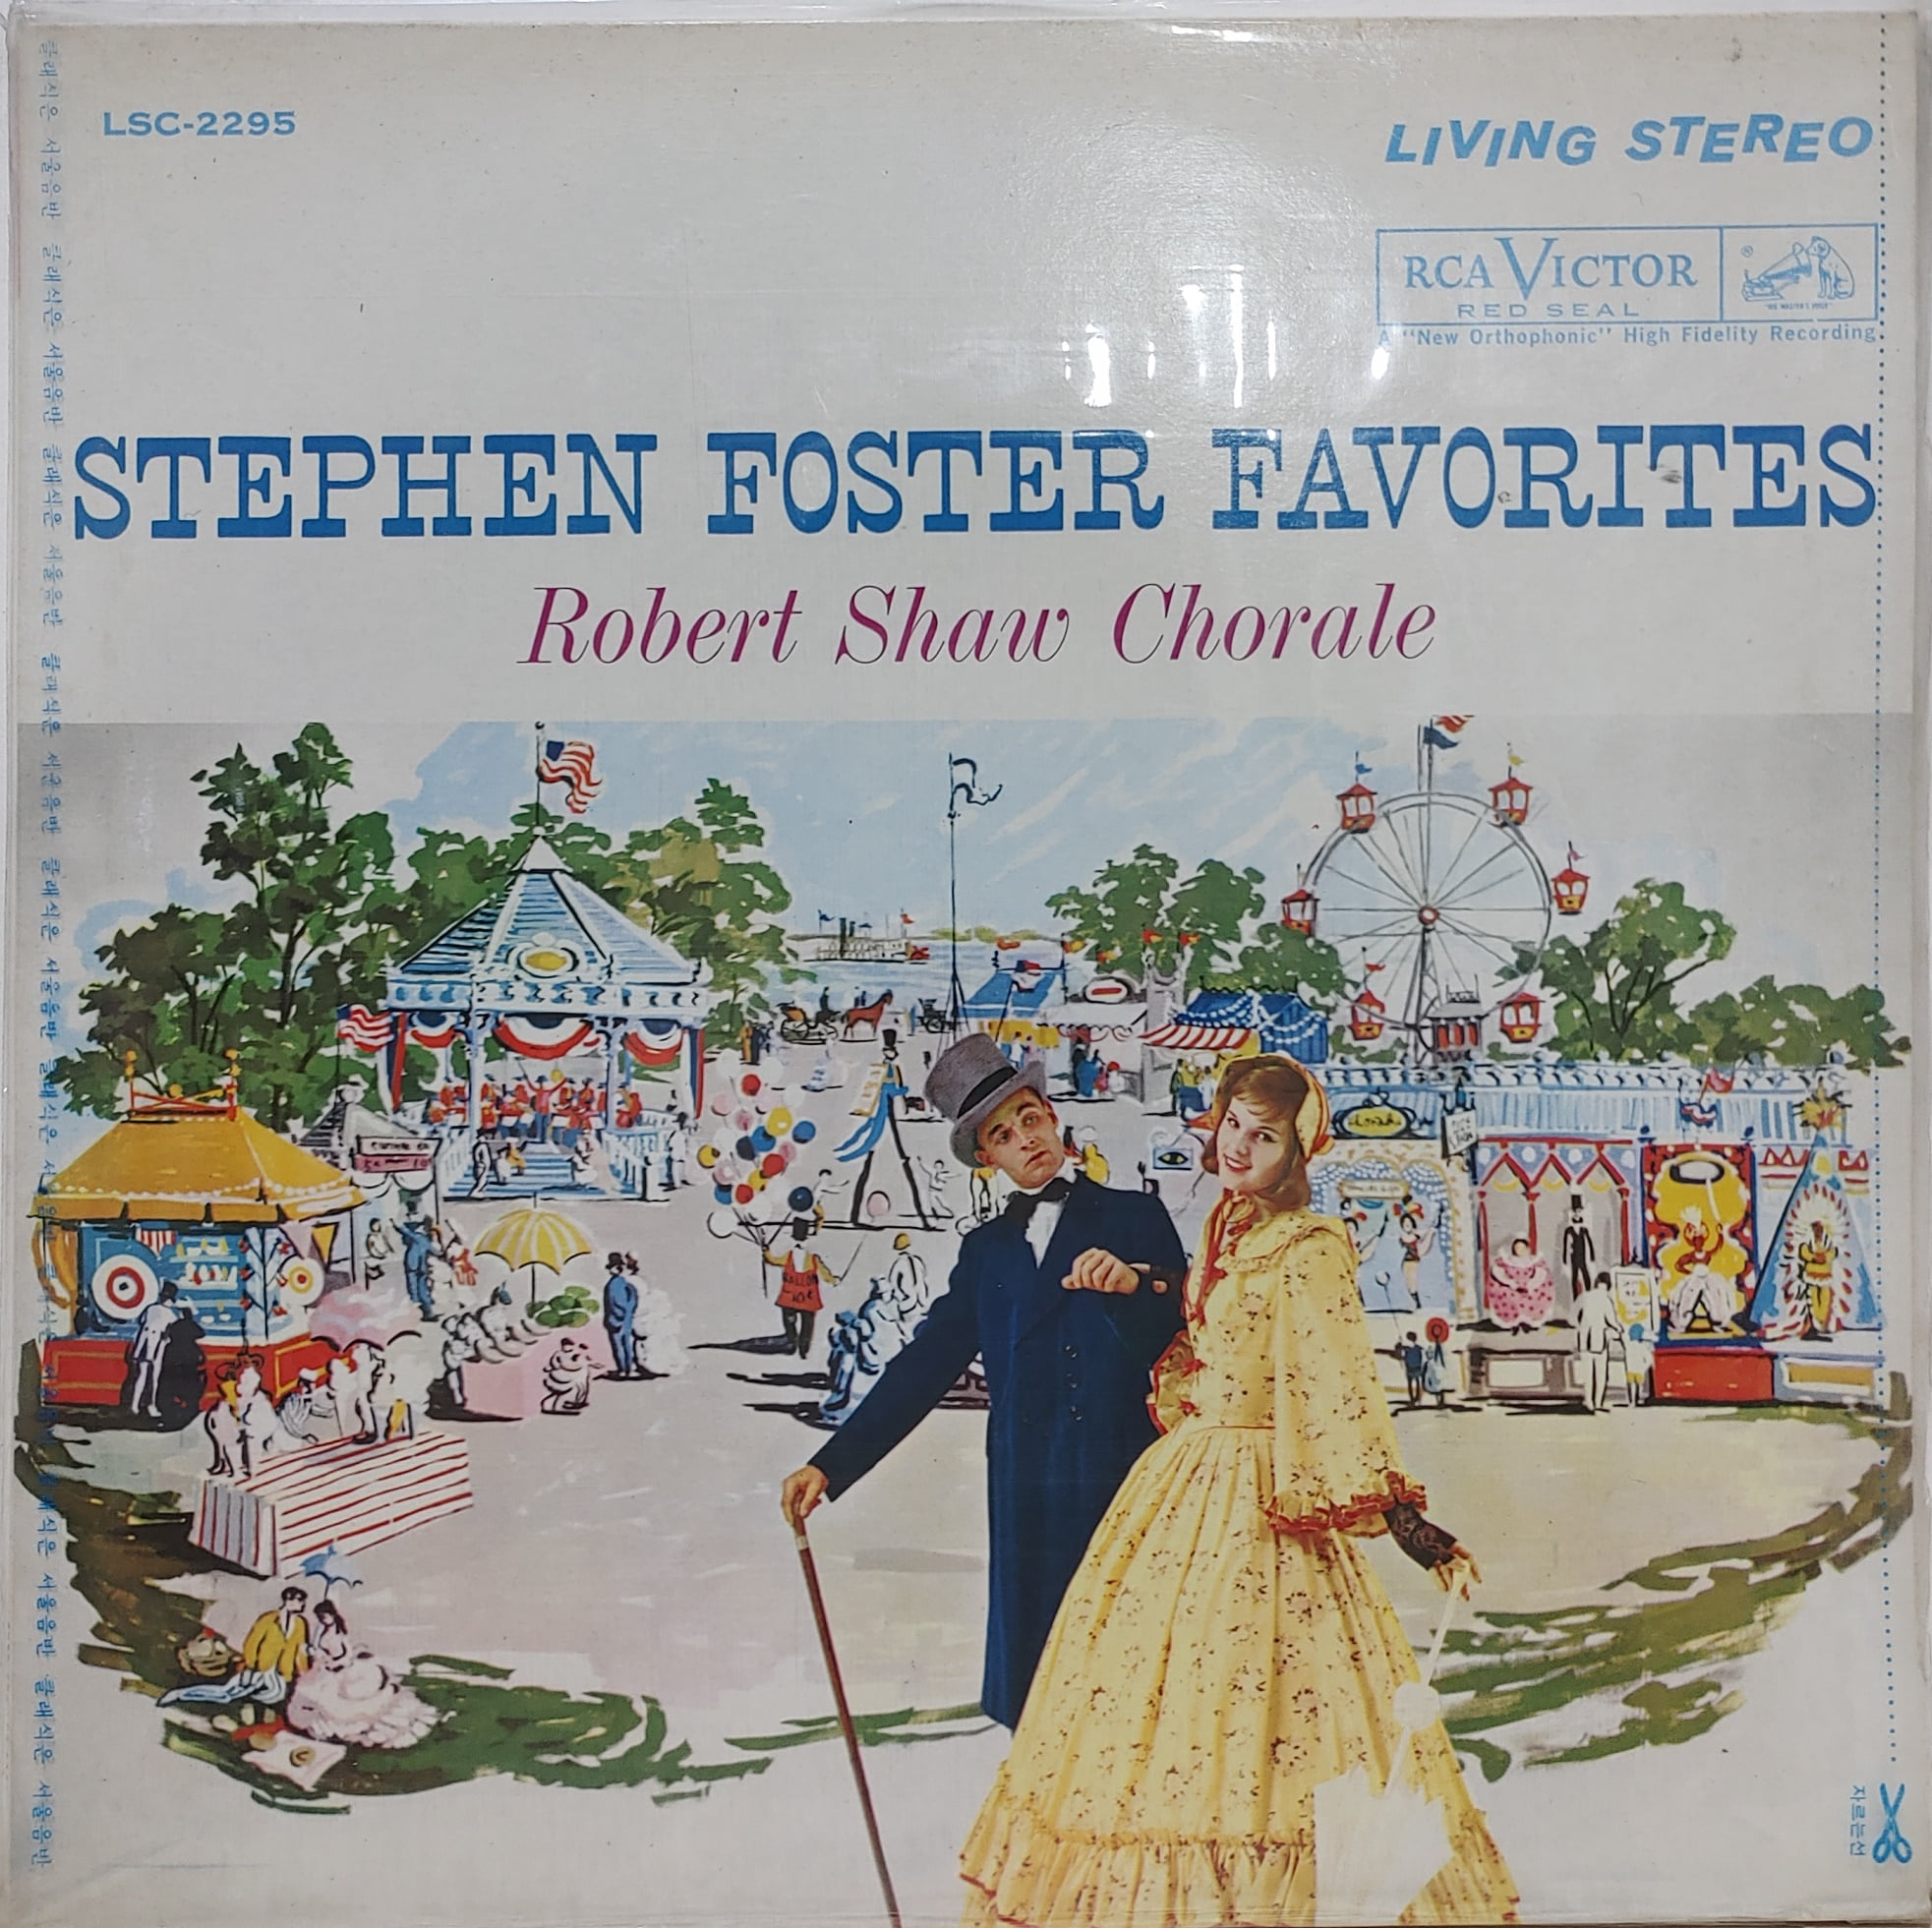 Stephen Foster Favorites